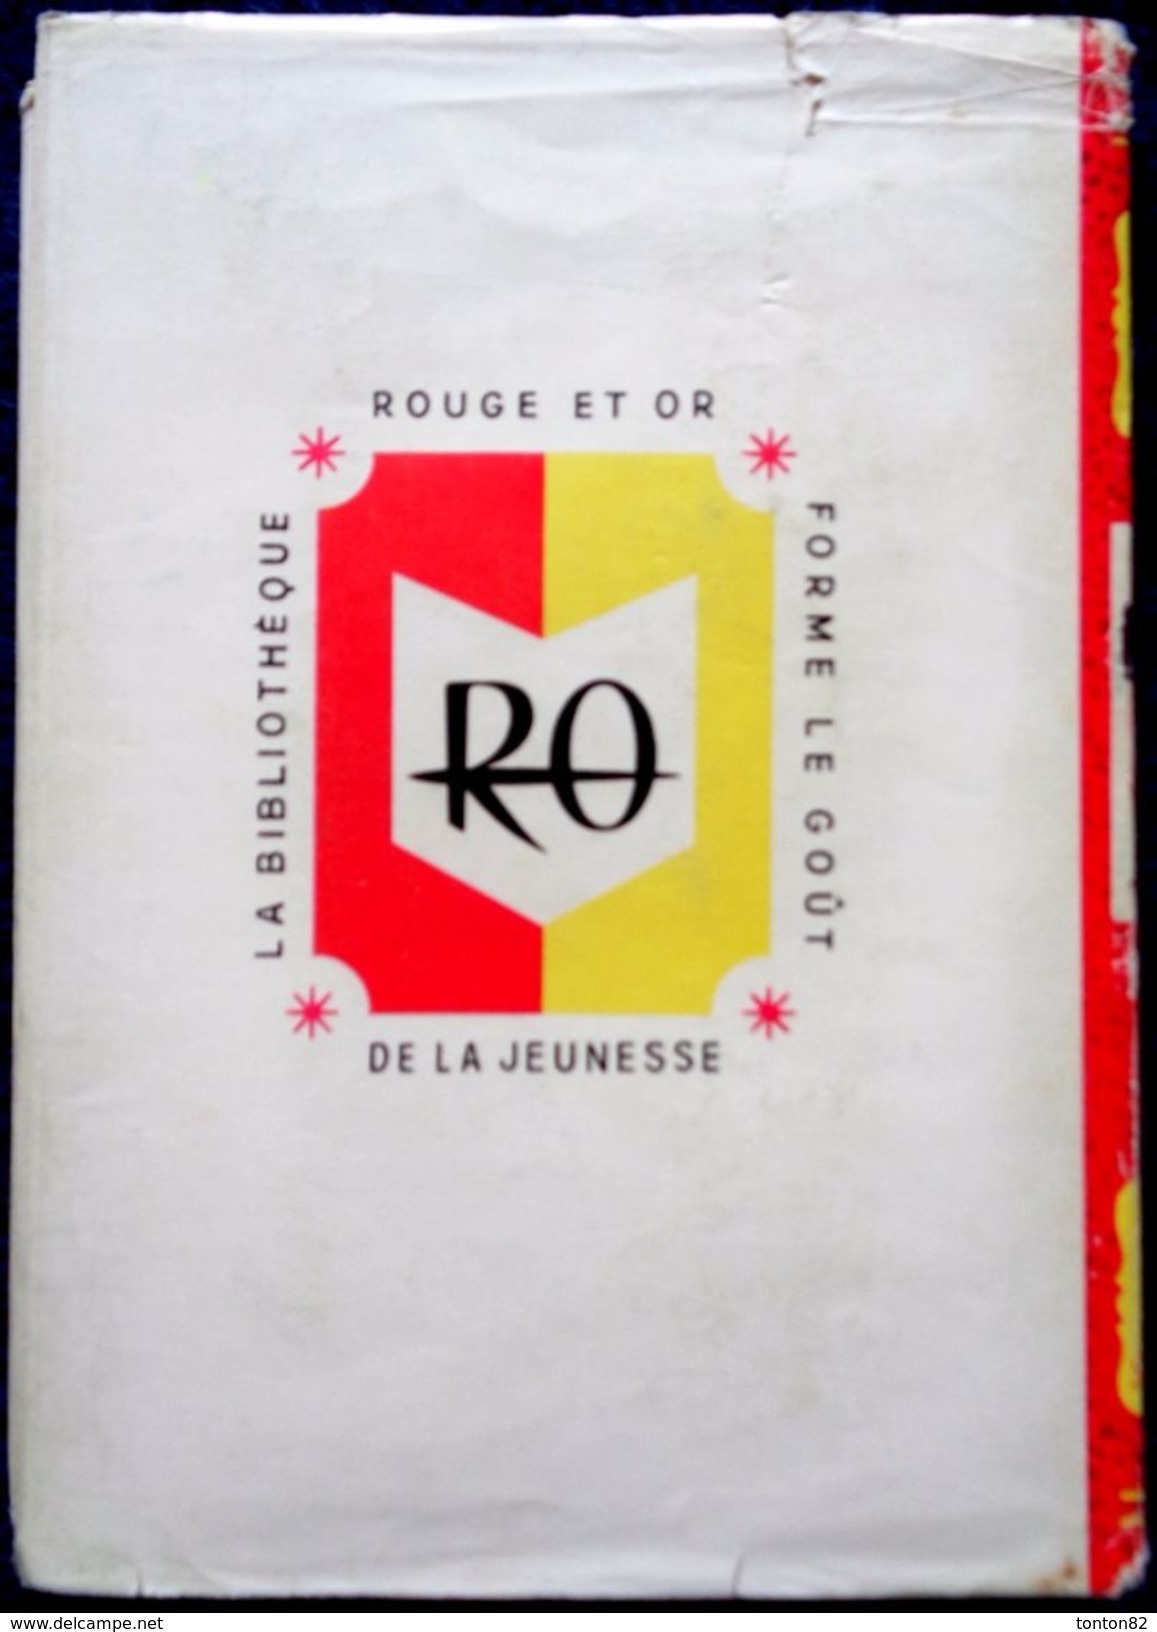 Lisbeth Werner -  Puck Détective - Bibliothèque Rouge Et Or  - (1958 ) - Bibliothèque Rouge Et Or